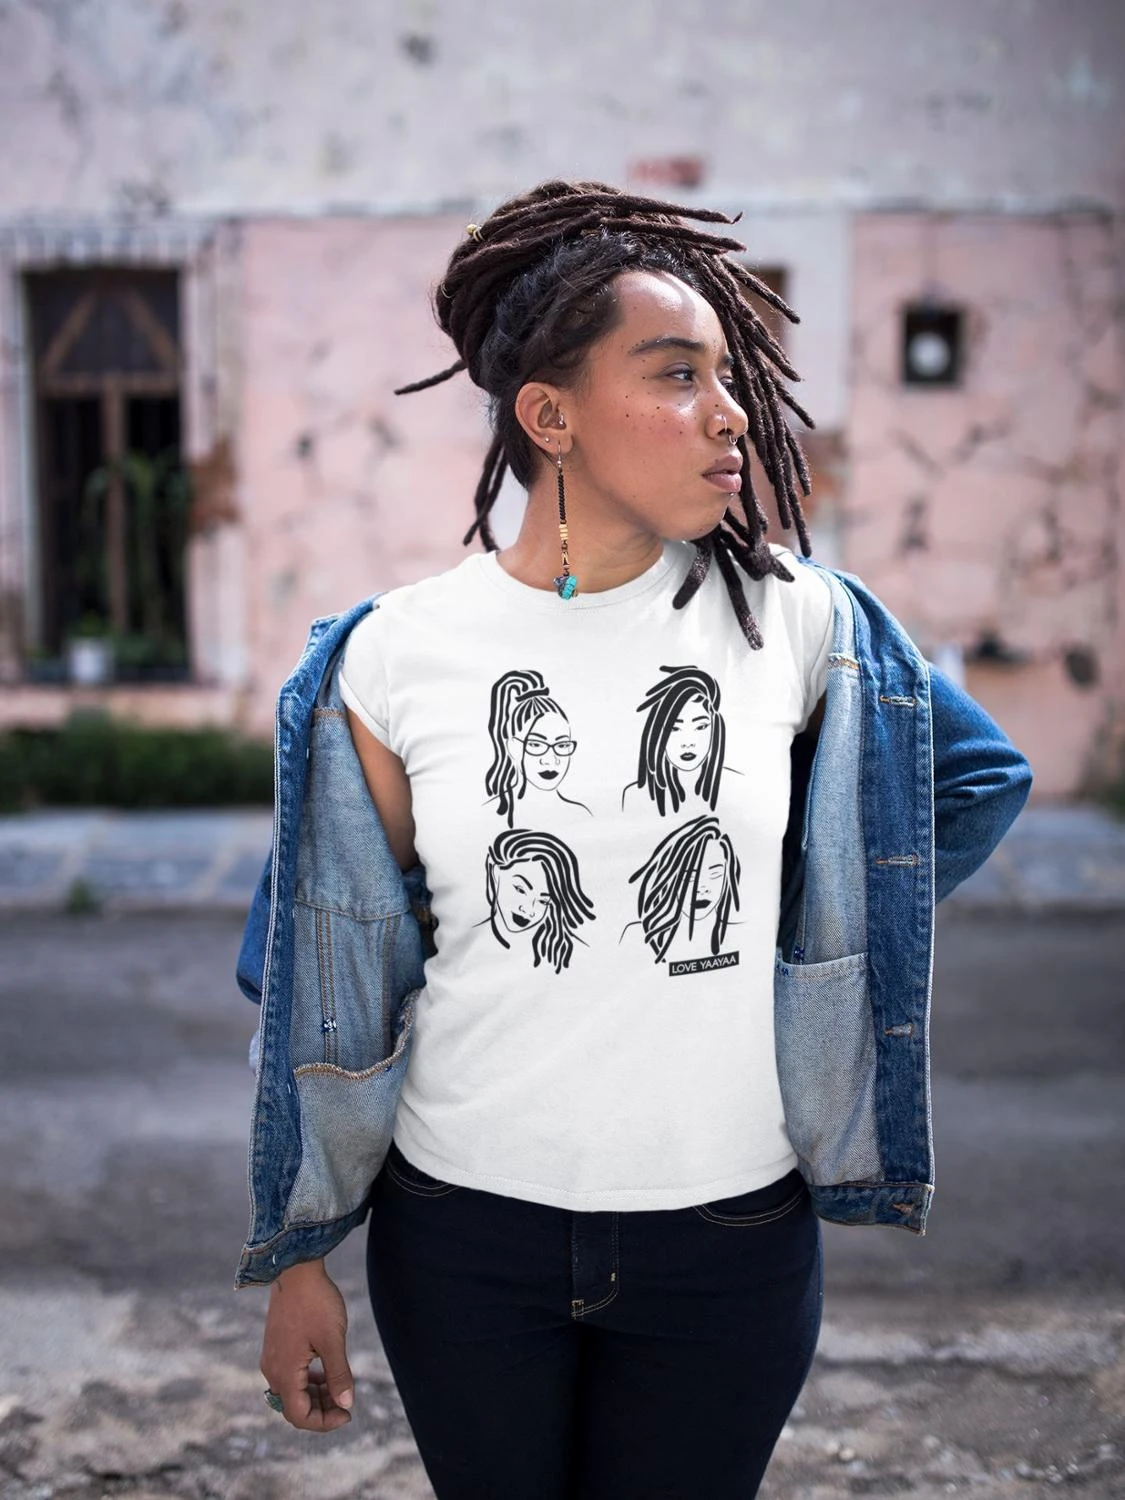 Dreadlocks Rock! T-shirt Funny Women Fashion 100% Cotton Vintage Hipster Graphic Tumblr Grunge Camisetas Unisex Tee Top Tshirts - T-shirts -